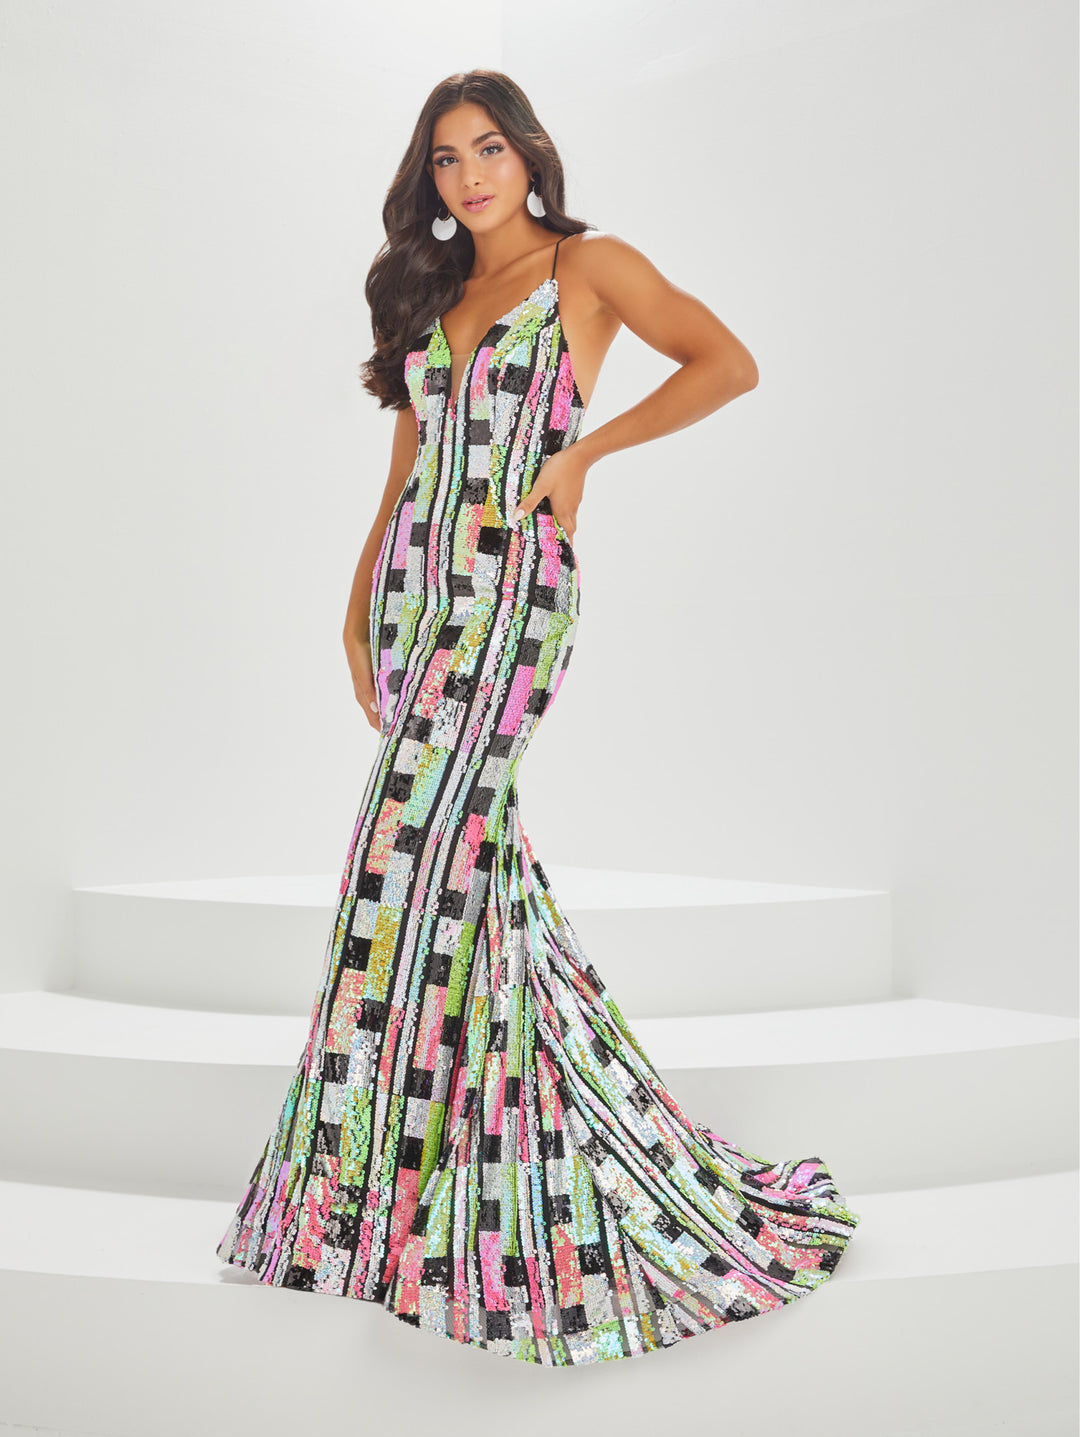 Geometric Sequin Print Mermaid Dress by Tiffany Designs 16001